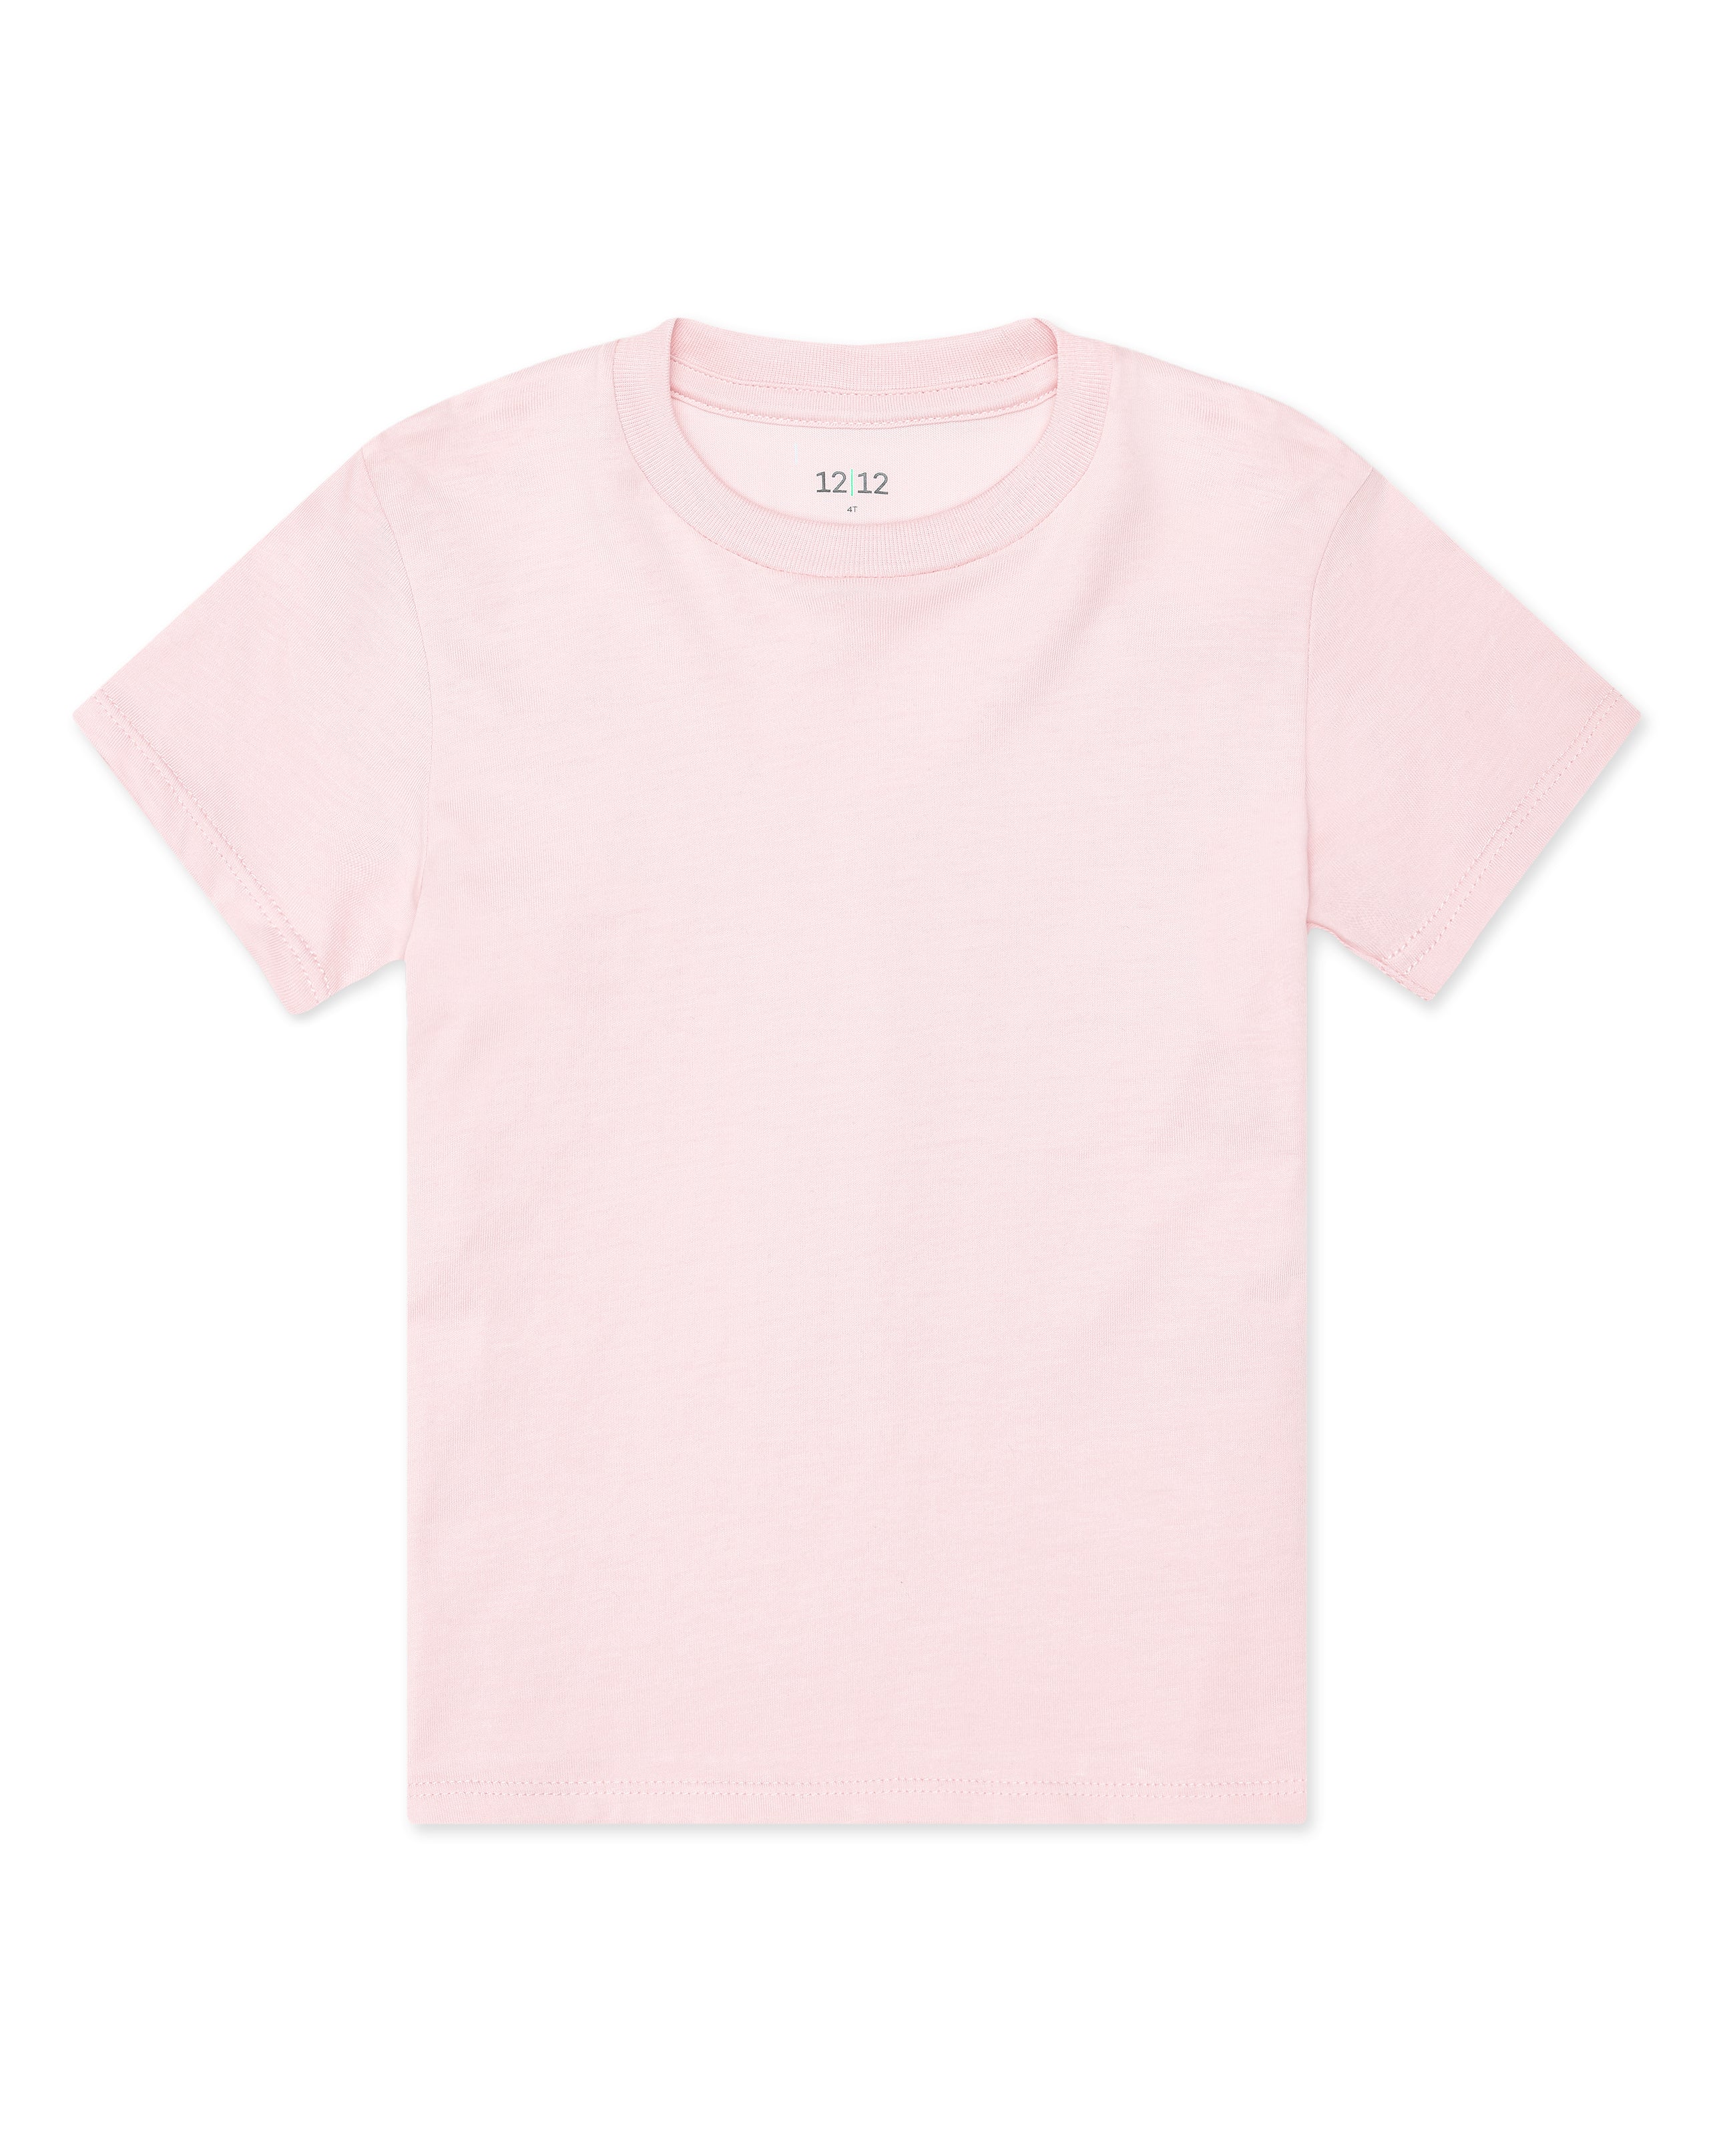 The Organic Short Sleeve Tee [Pink]